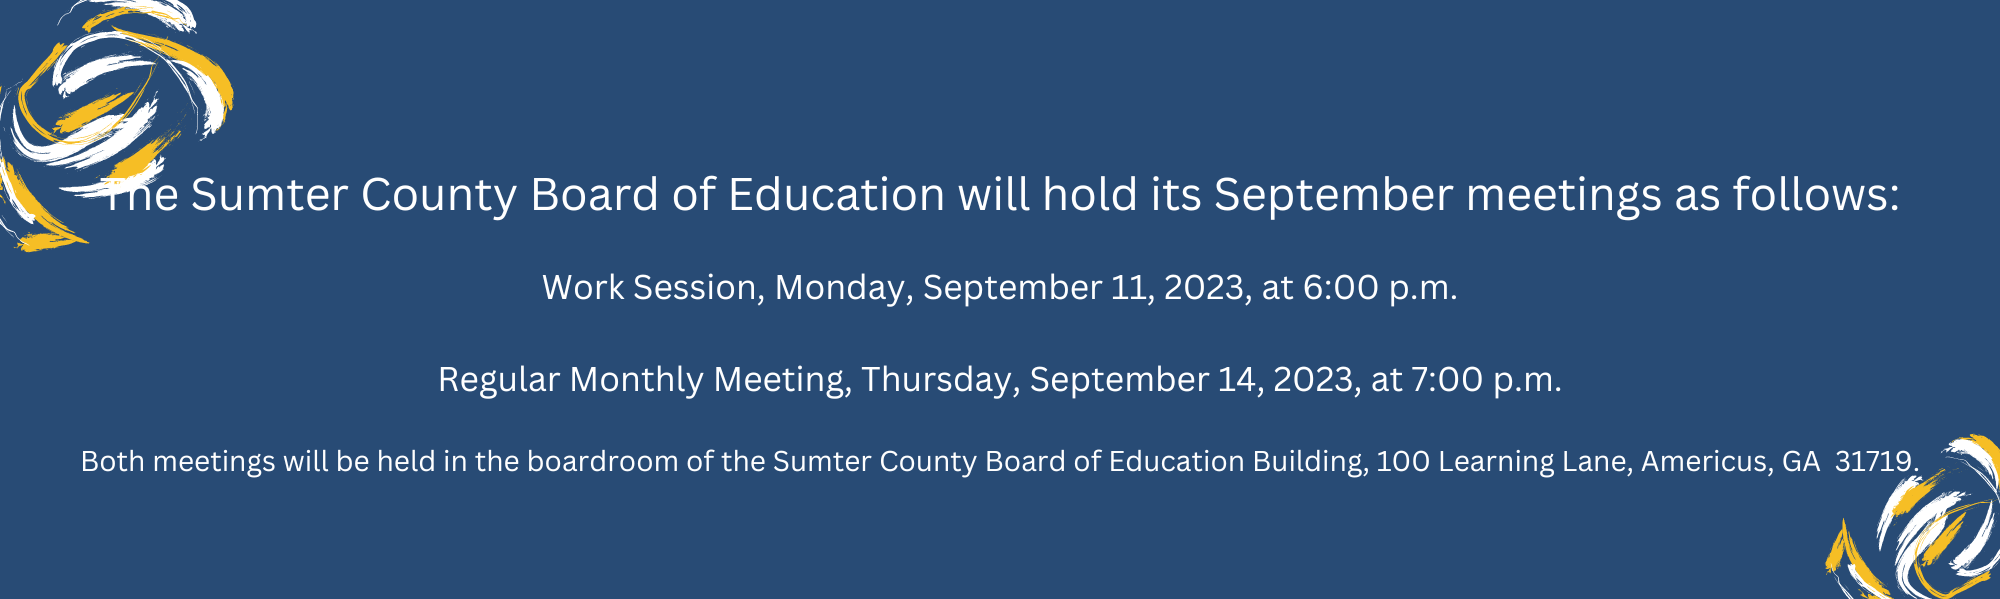 September Board Meetings Announcement